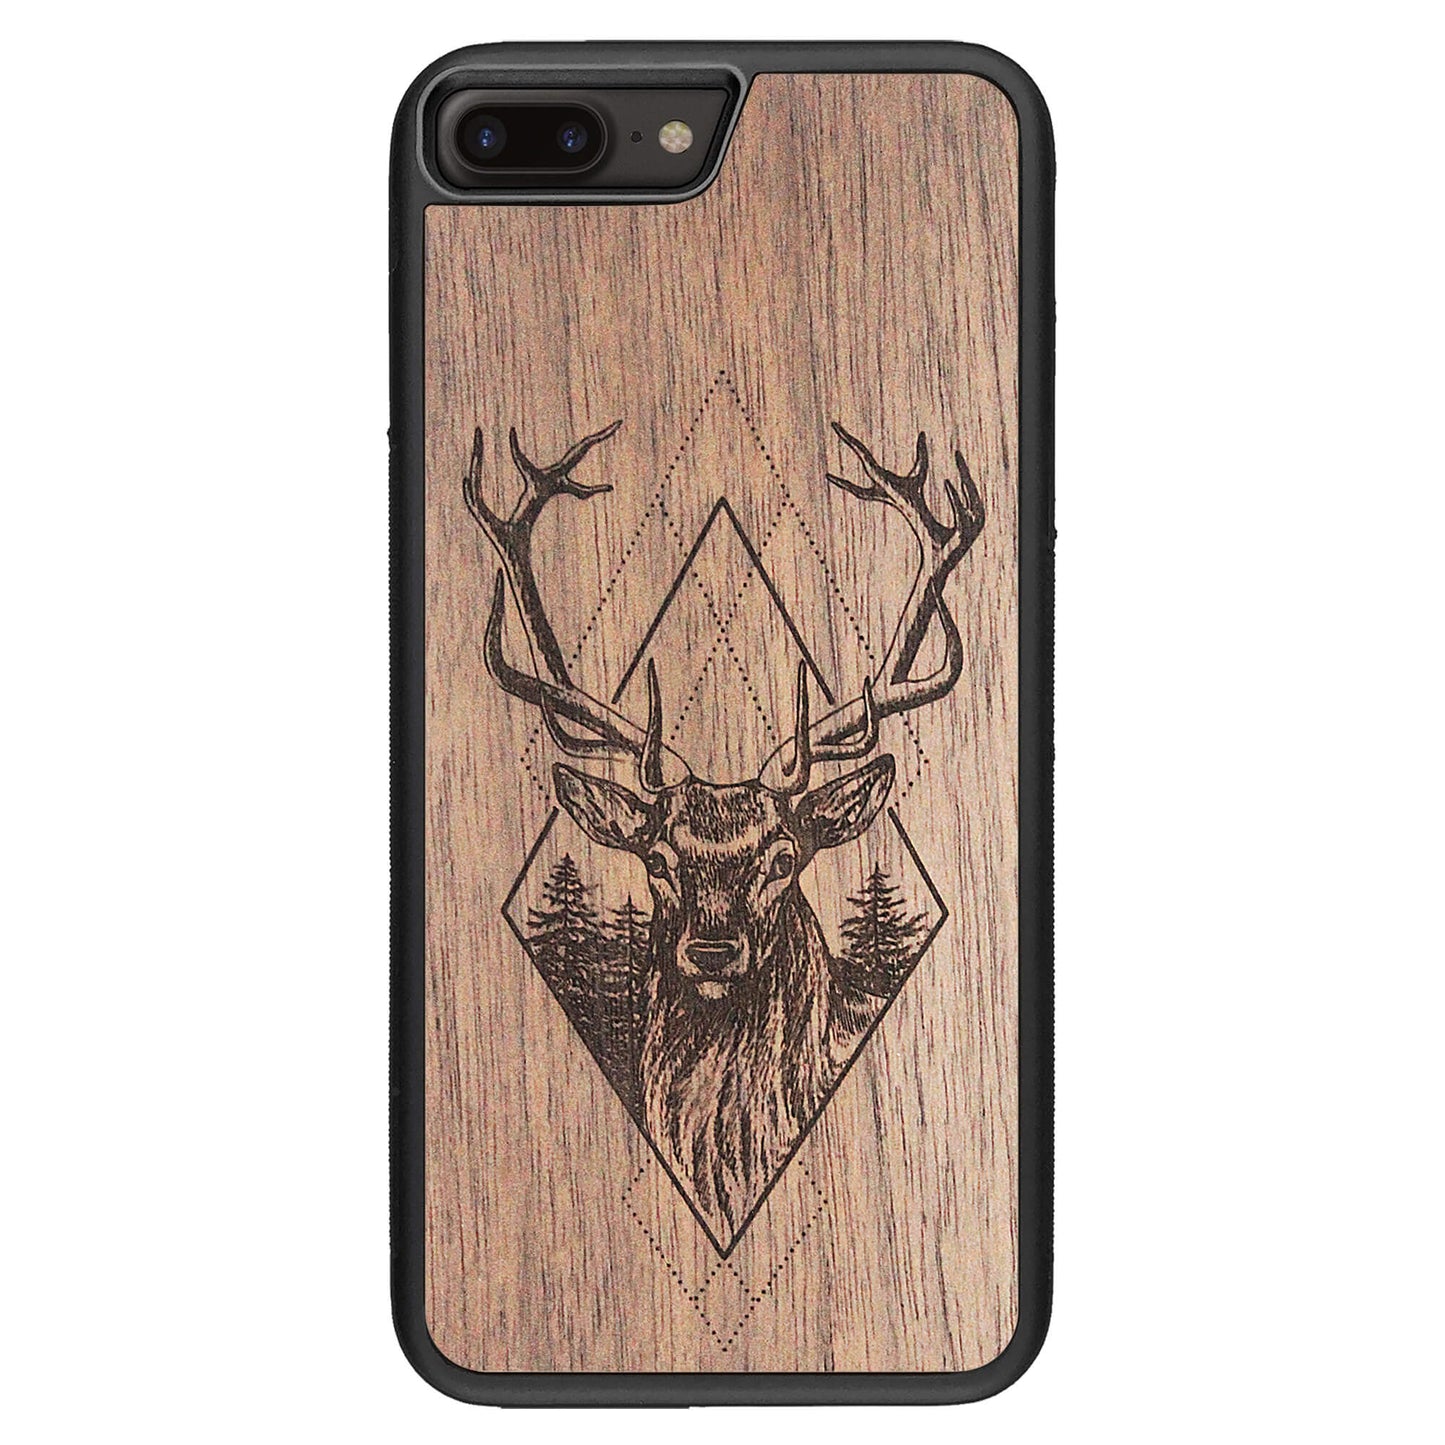 Wooden Case for iPhone 8 Plus Deer